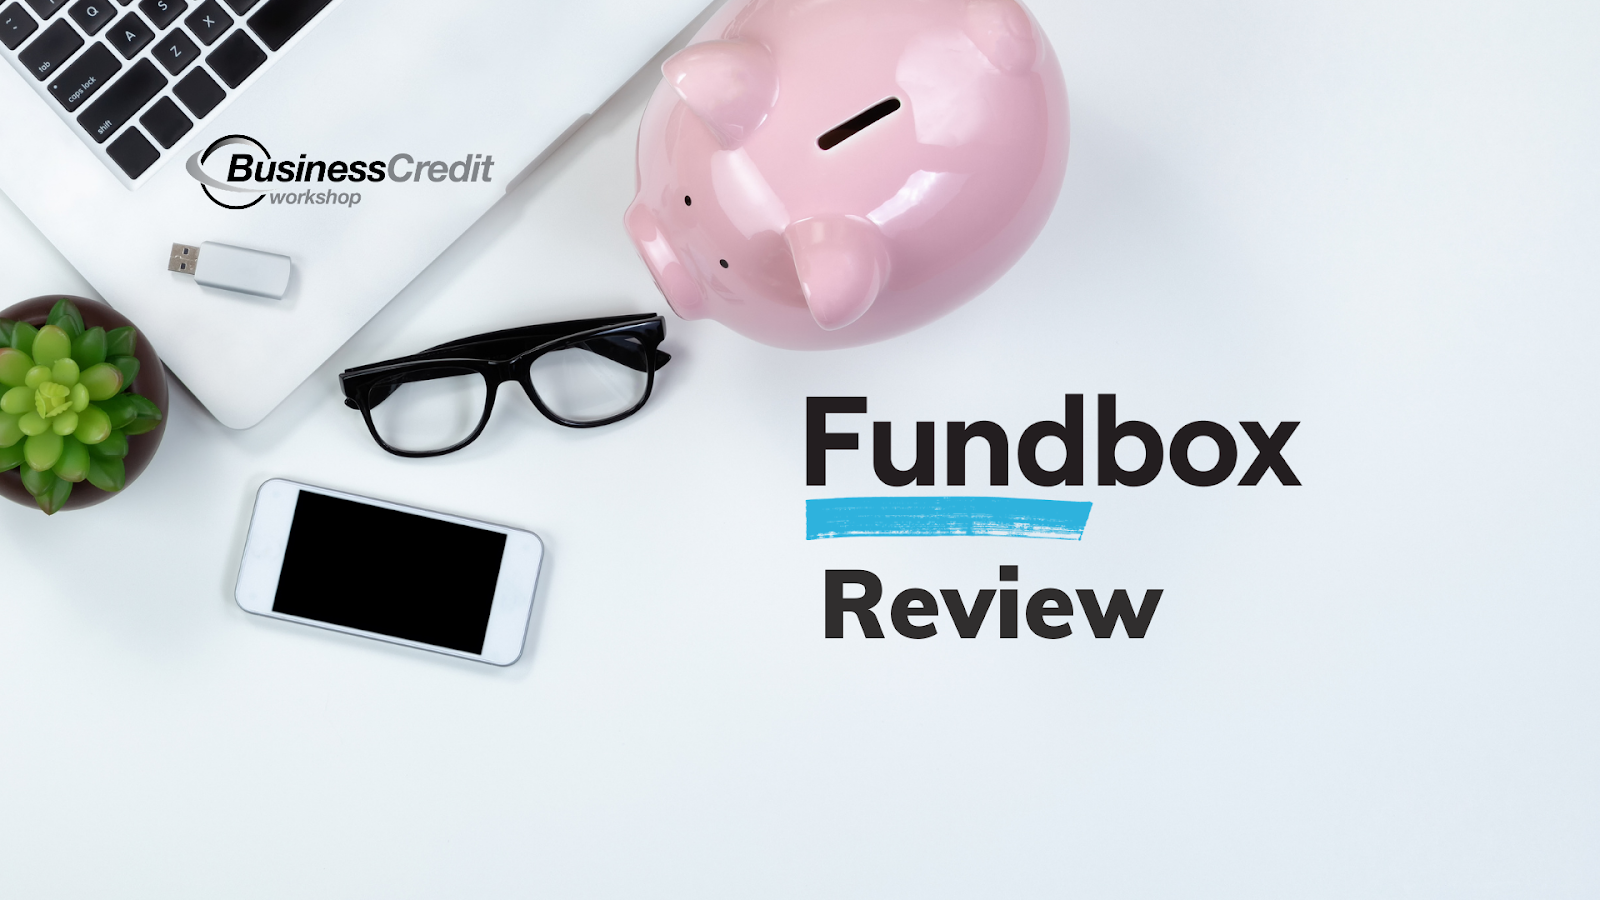 Fundbox review